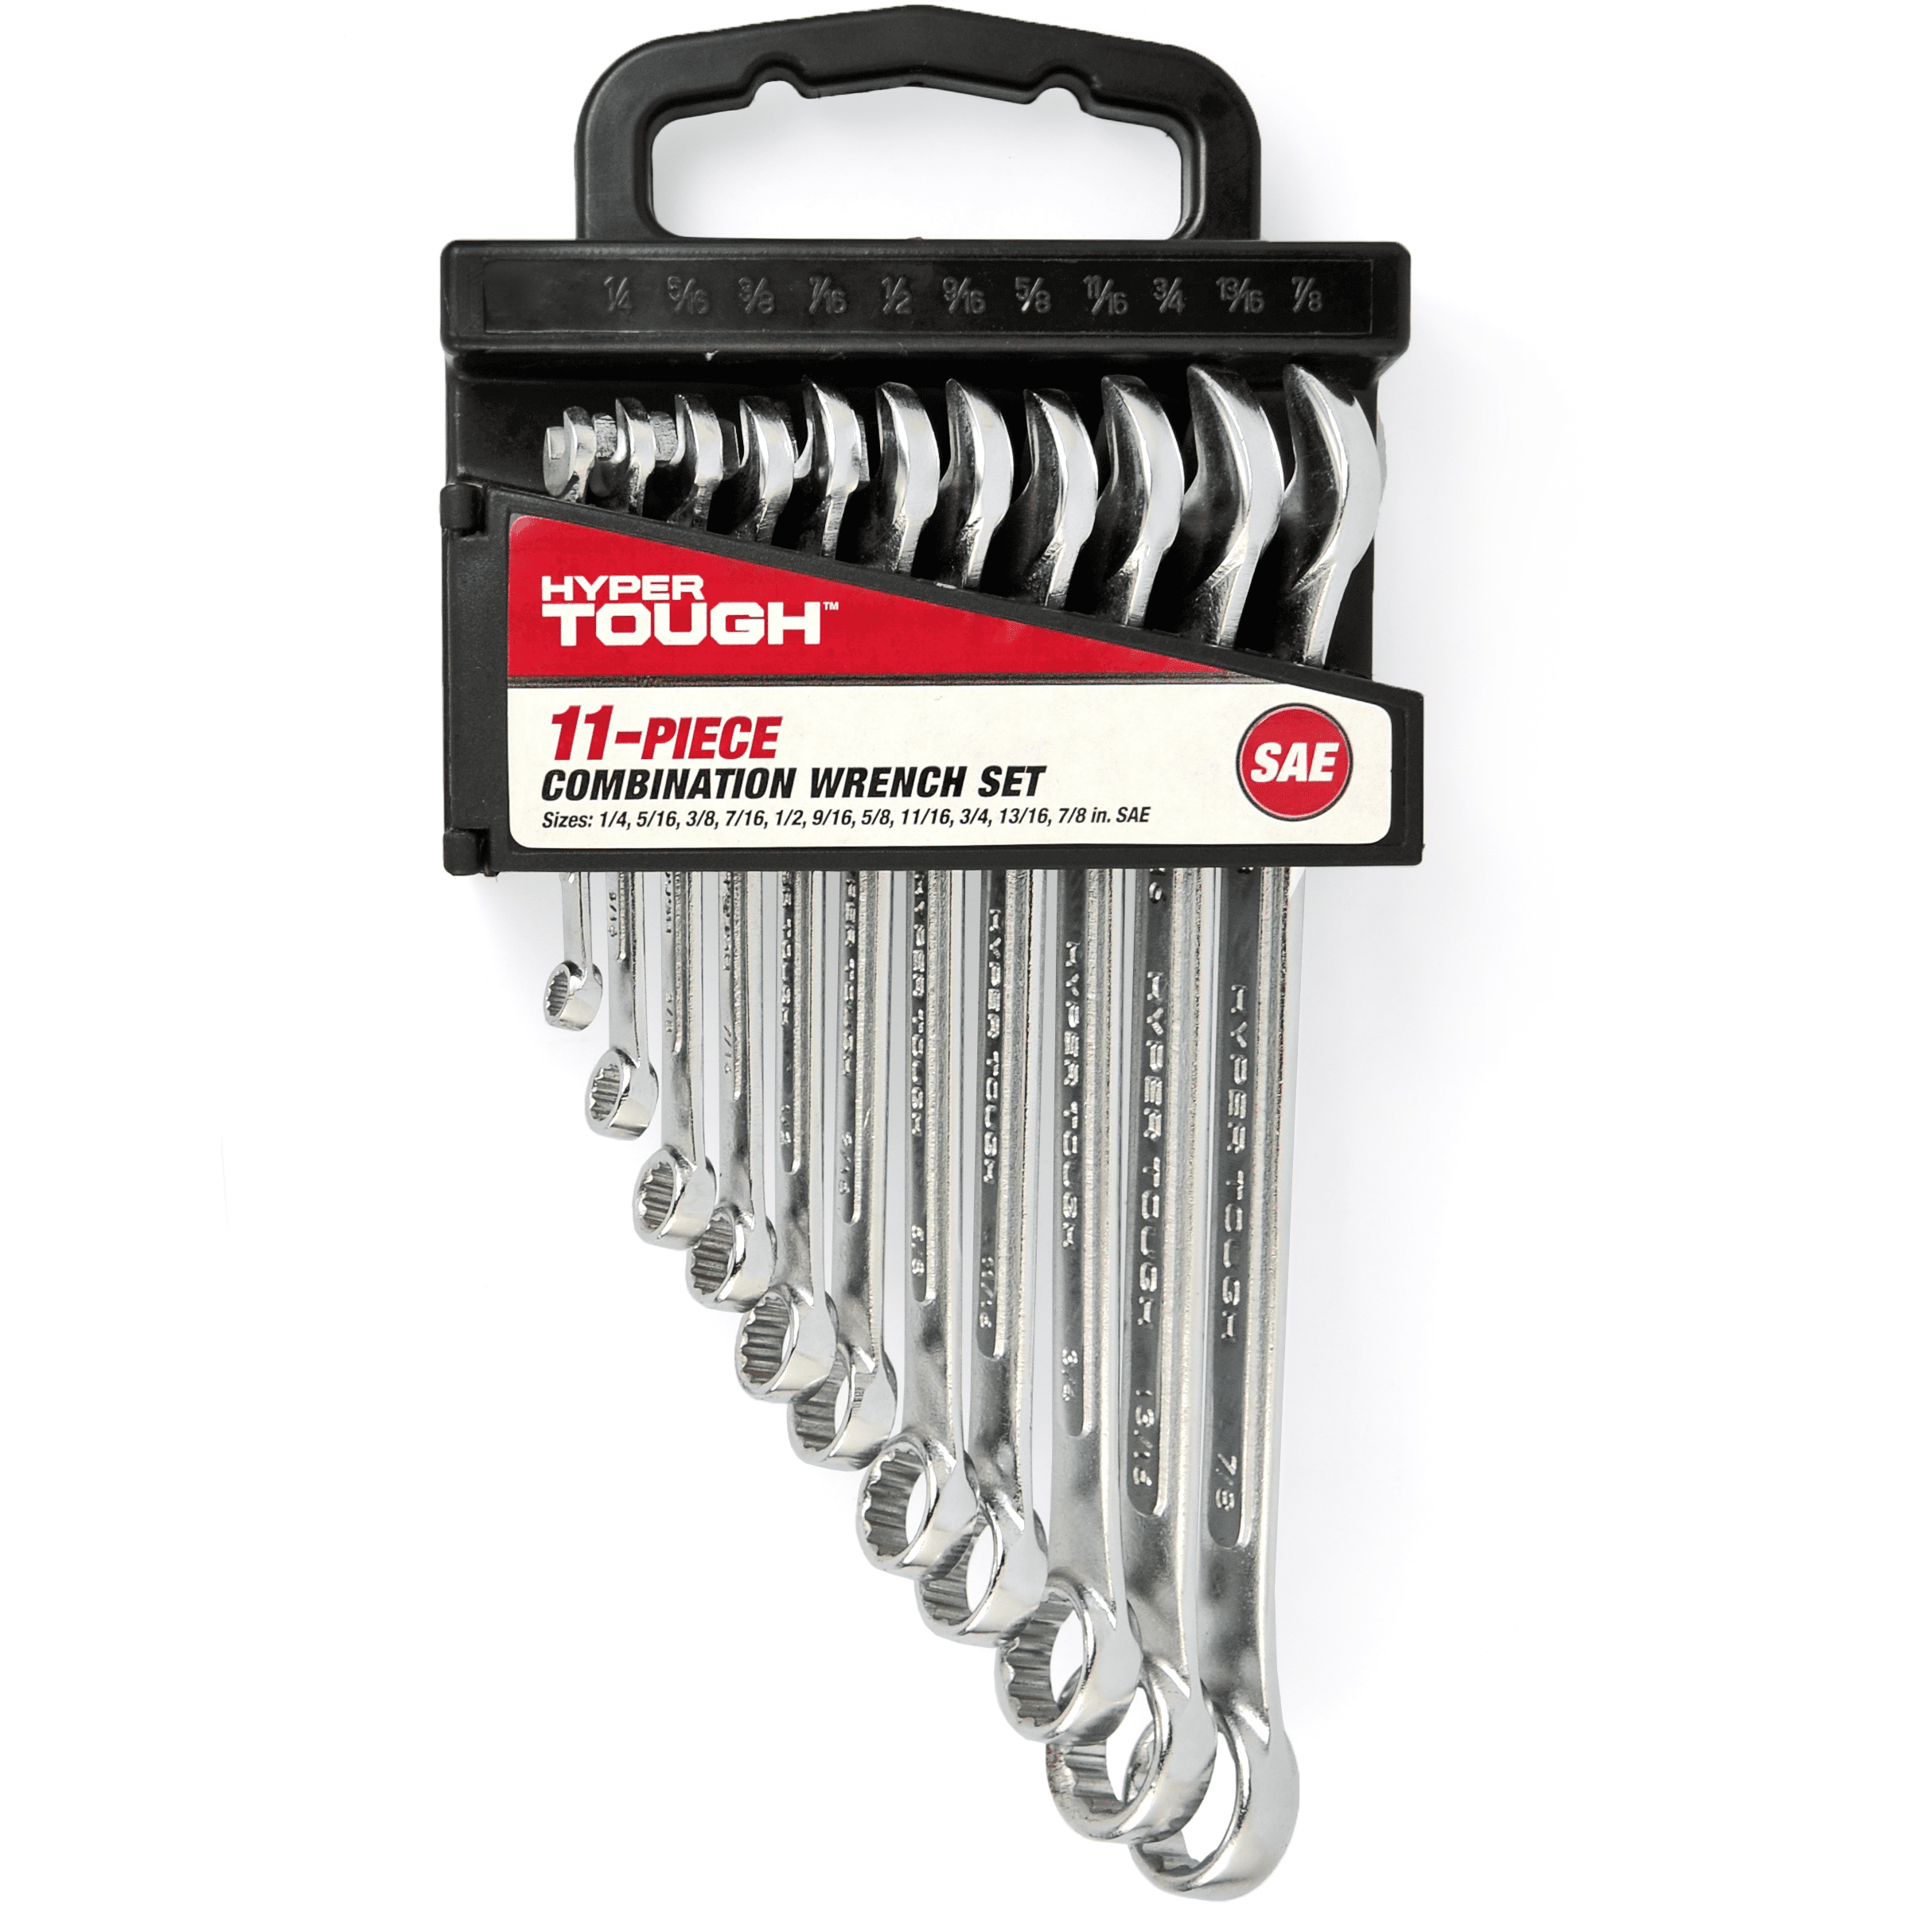 Hyper Tough 15-Piece Combination Wrench Set, SAE - Walmart.com